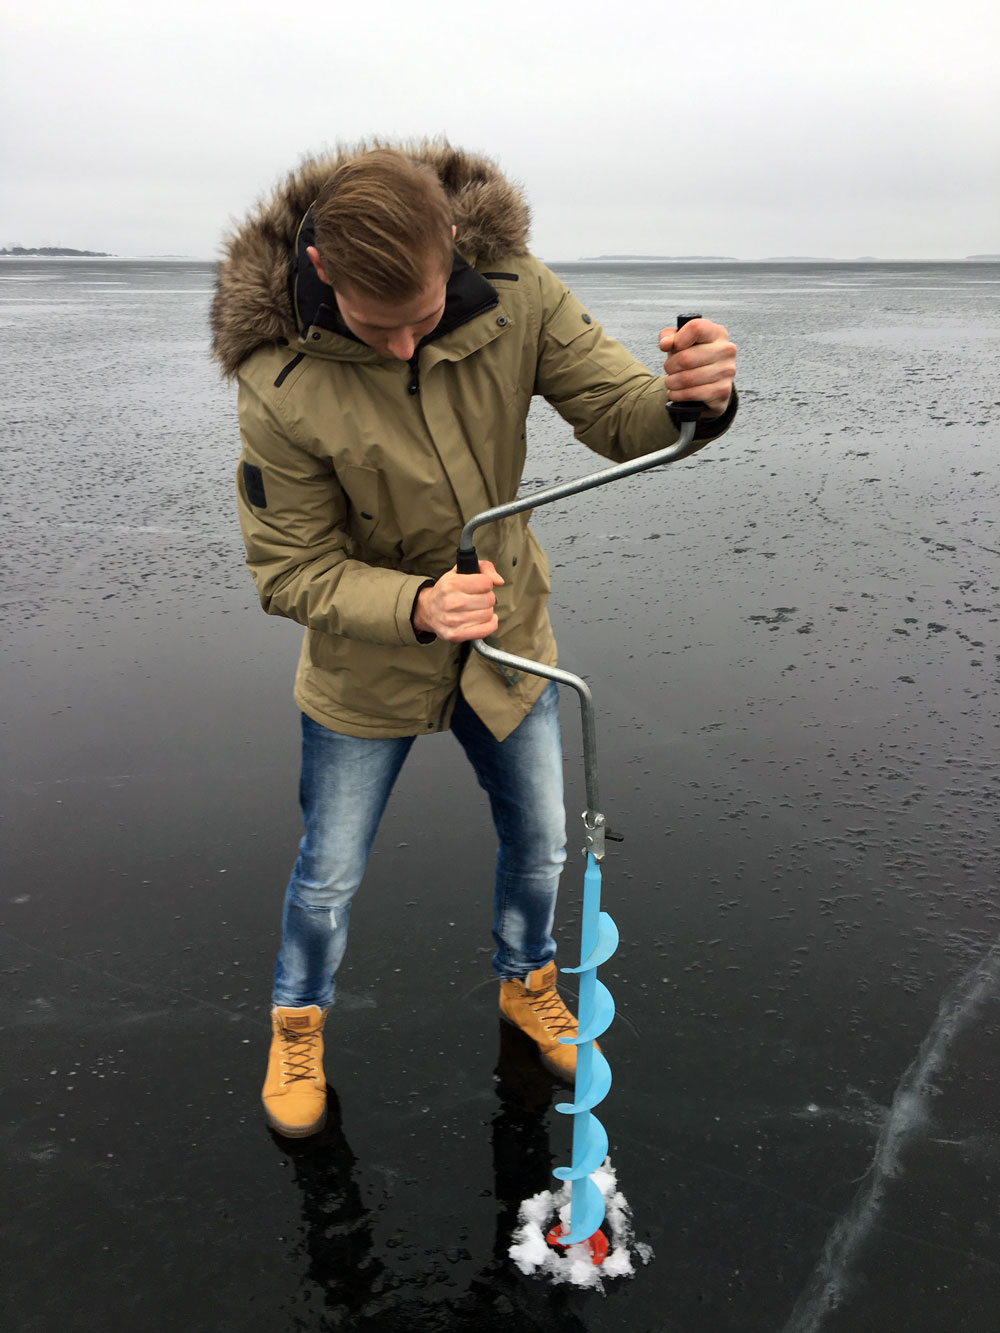 Ice fishing in Karlstad